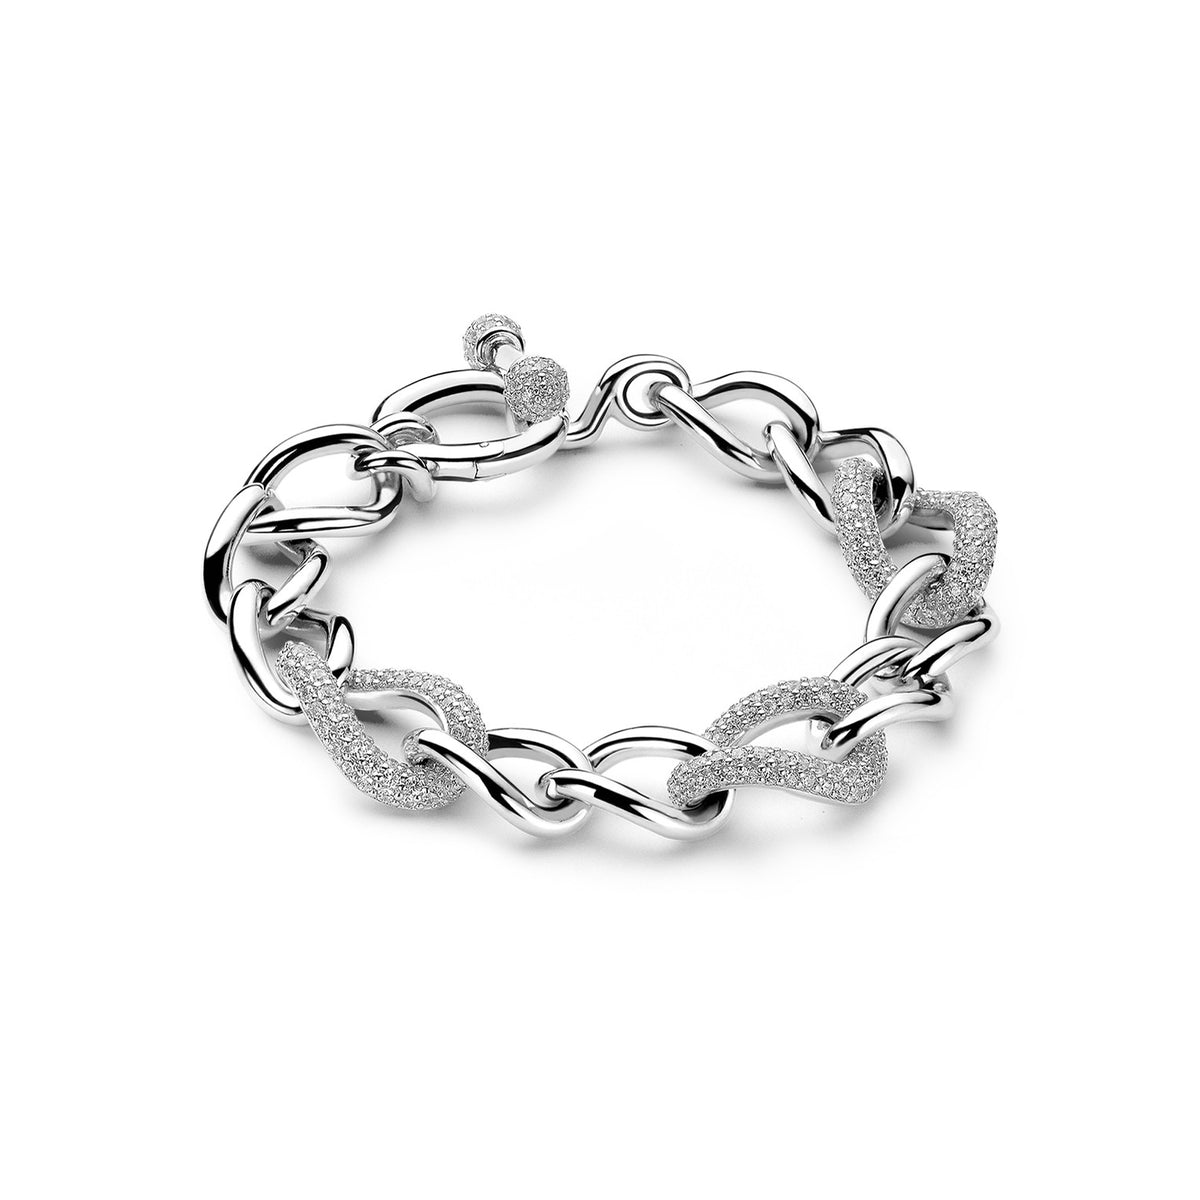 TI SENTO Sterling Silver Large Link Bracelet